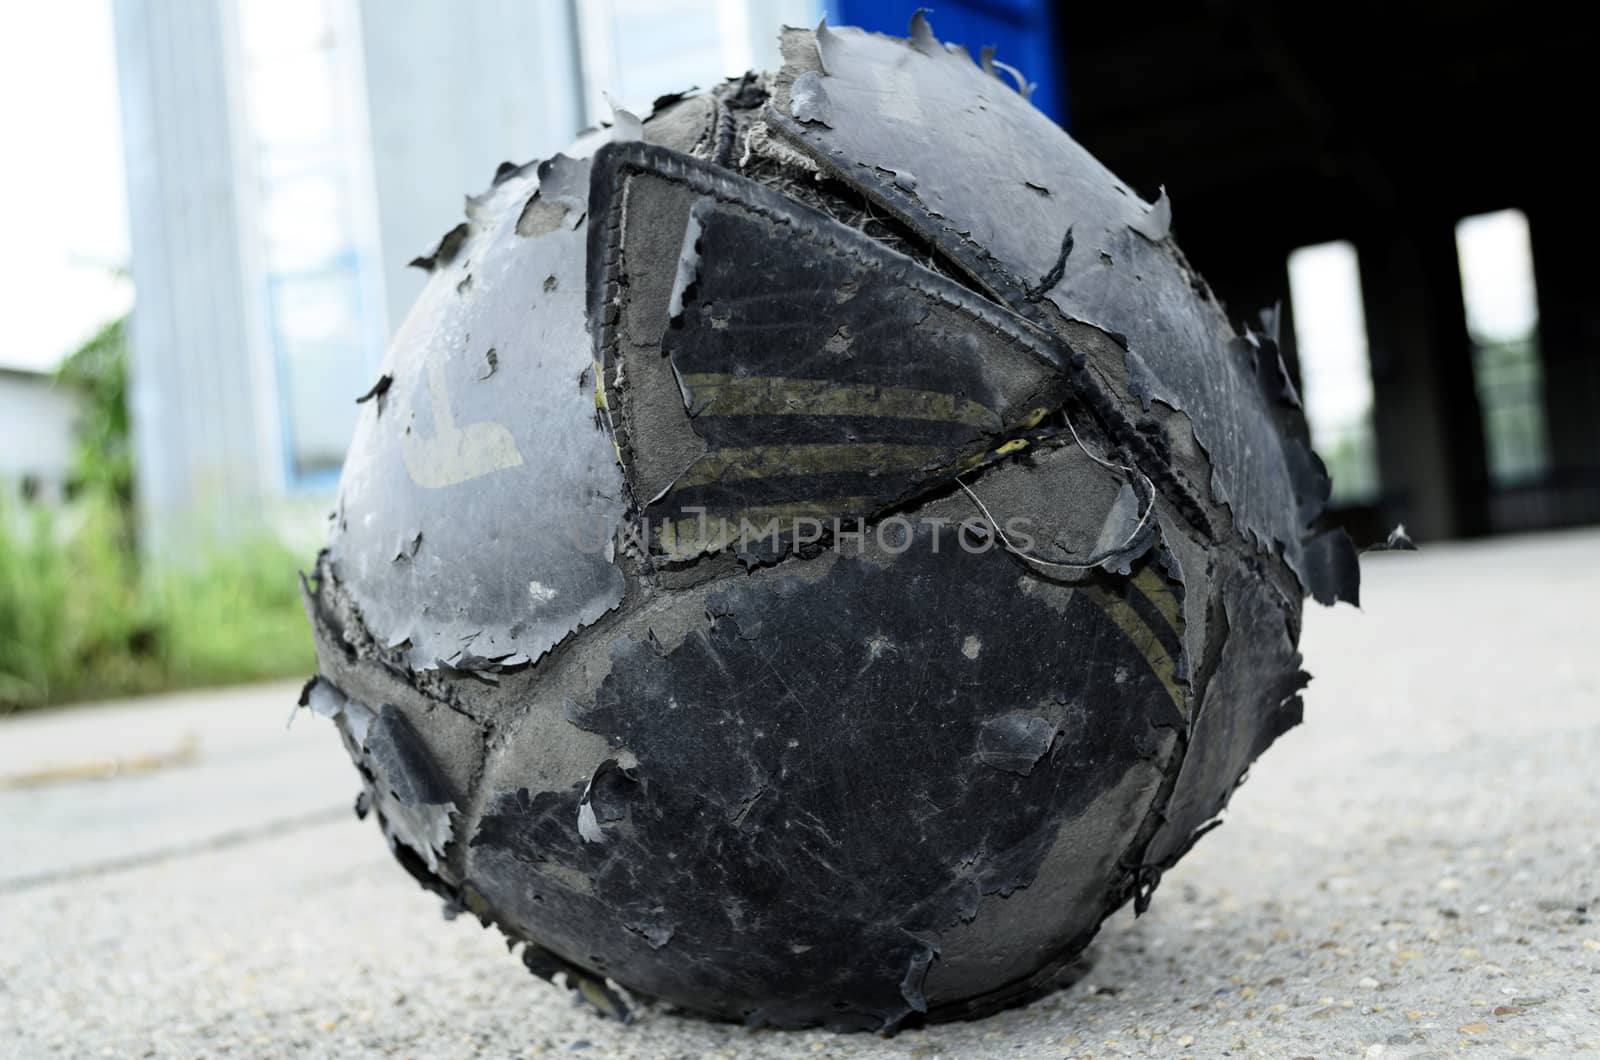 Old football ball badly ragged